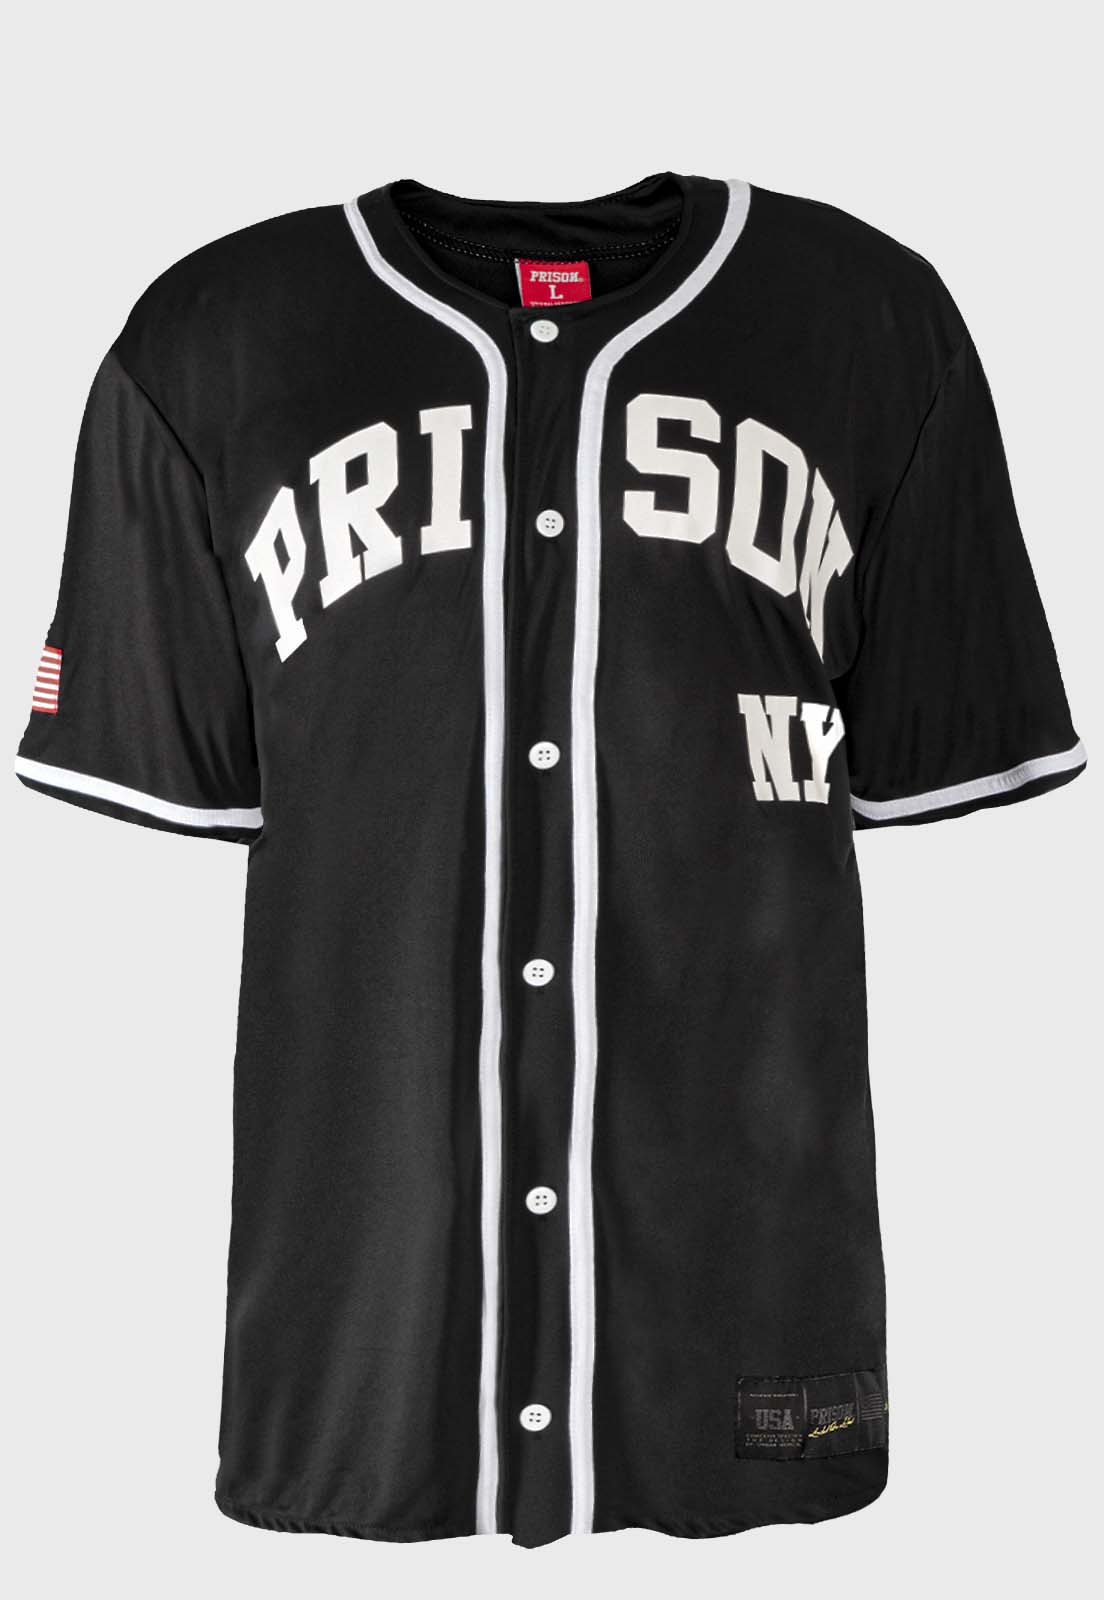 Camisa de Baseball Prison New League yorks